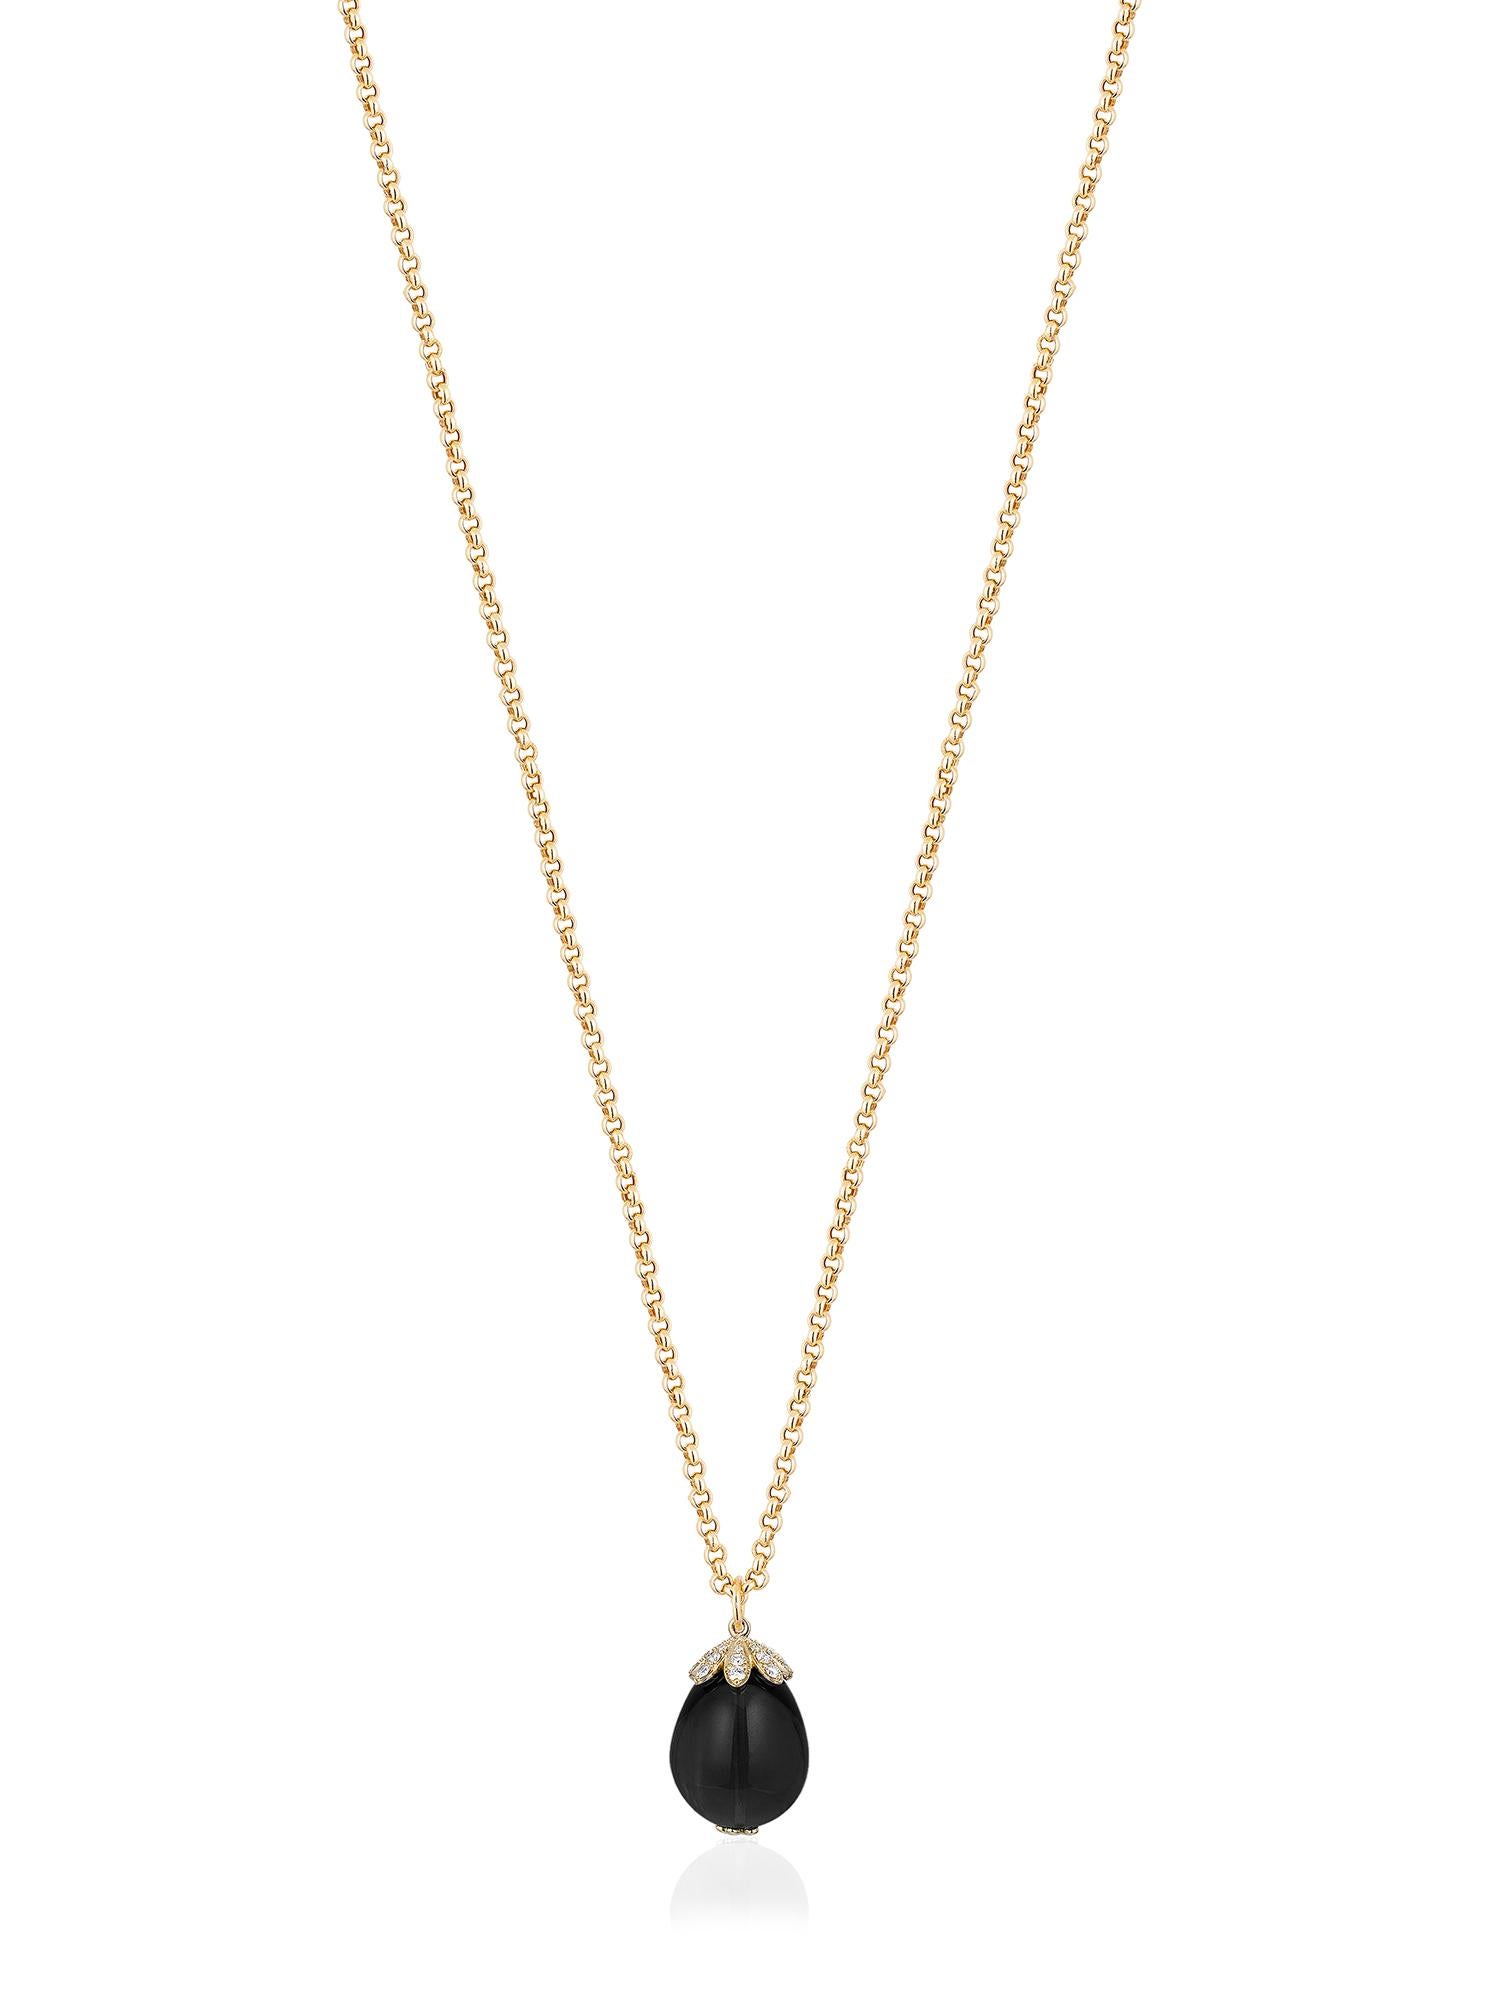 Contemporary Goshwara Black Spinel and Diamond Pendant For Sale